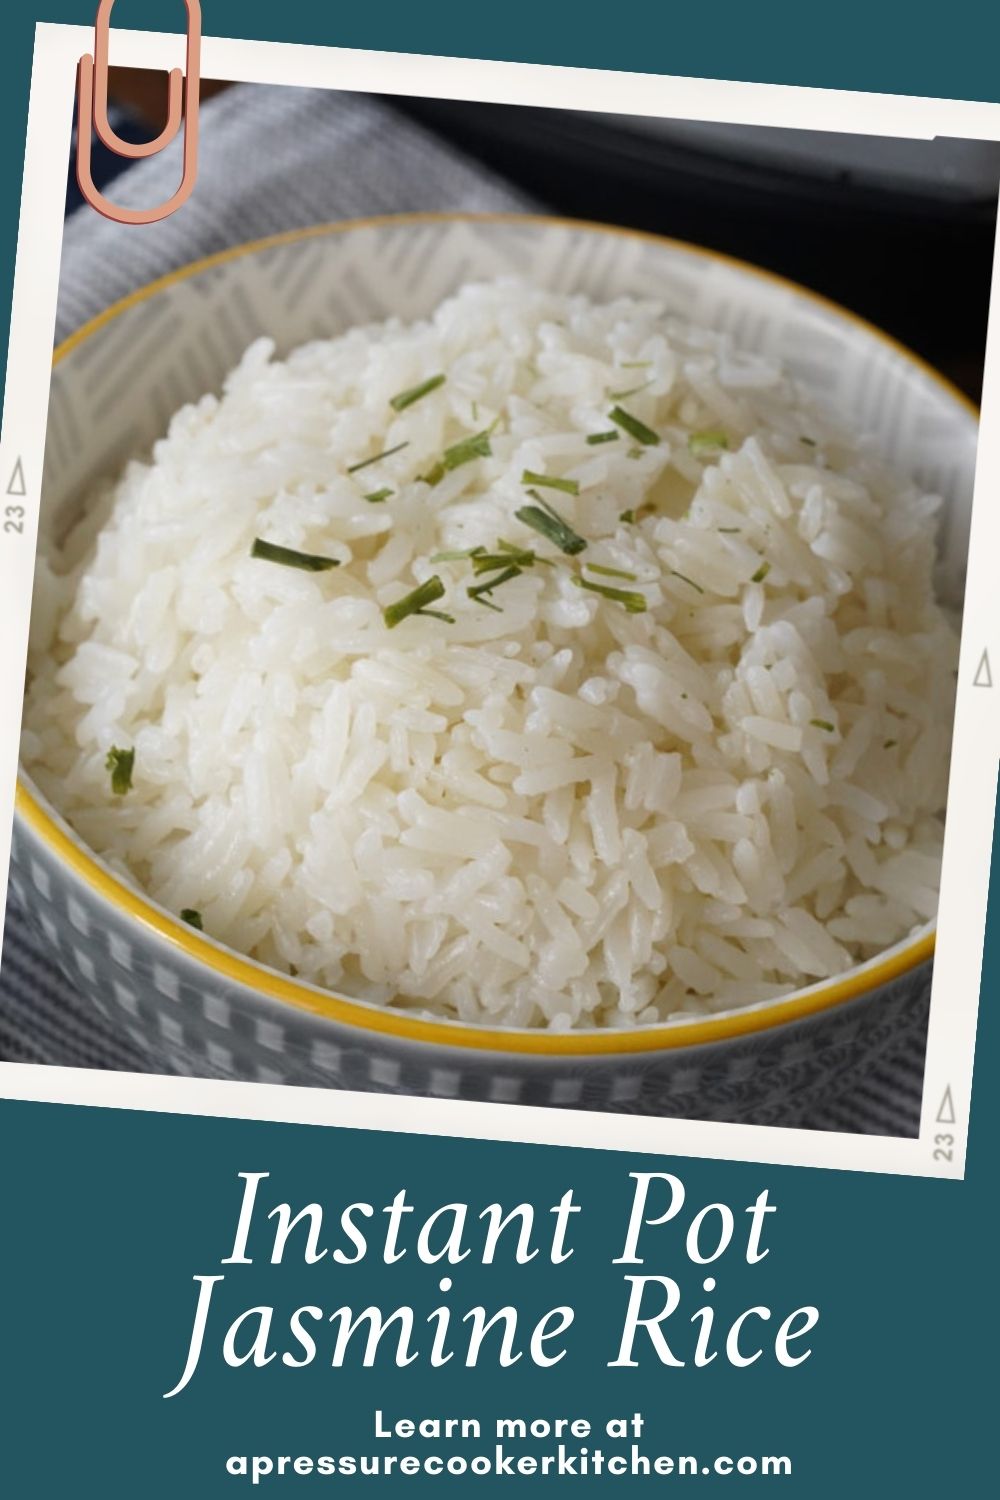 Bowl of jasmine rice